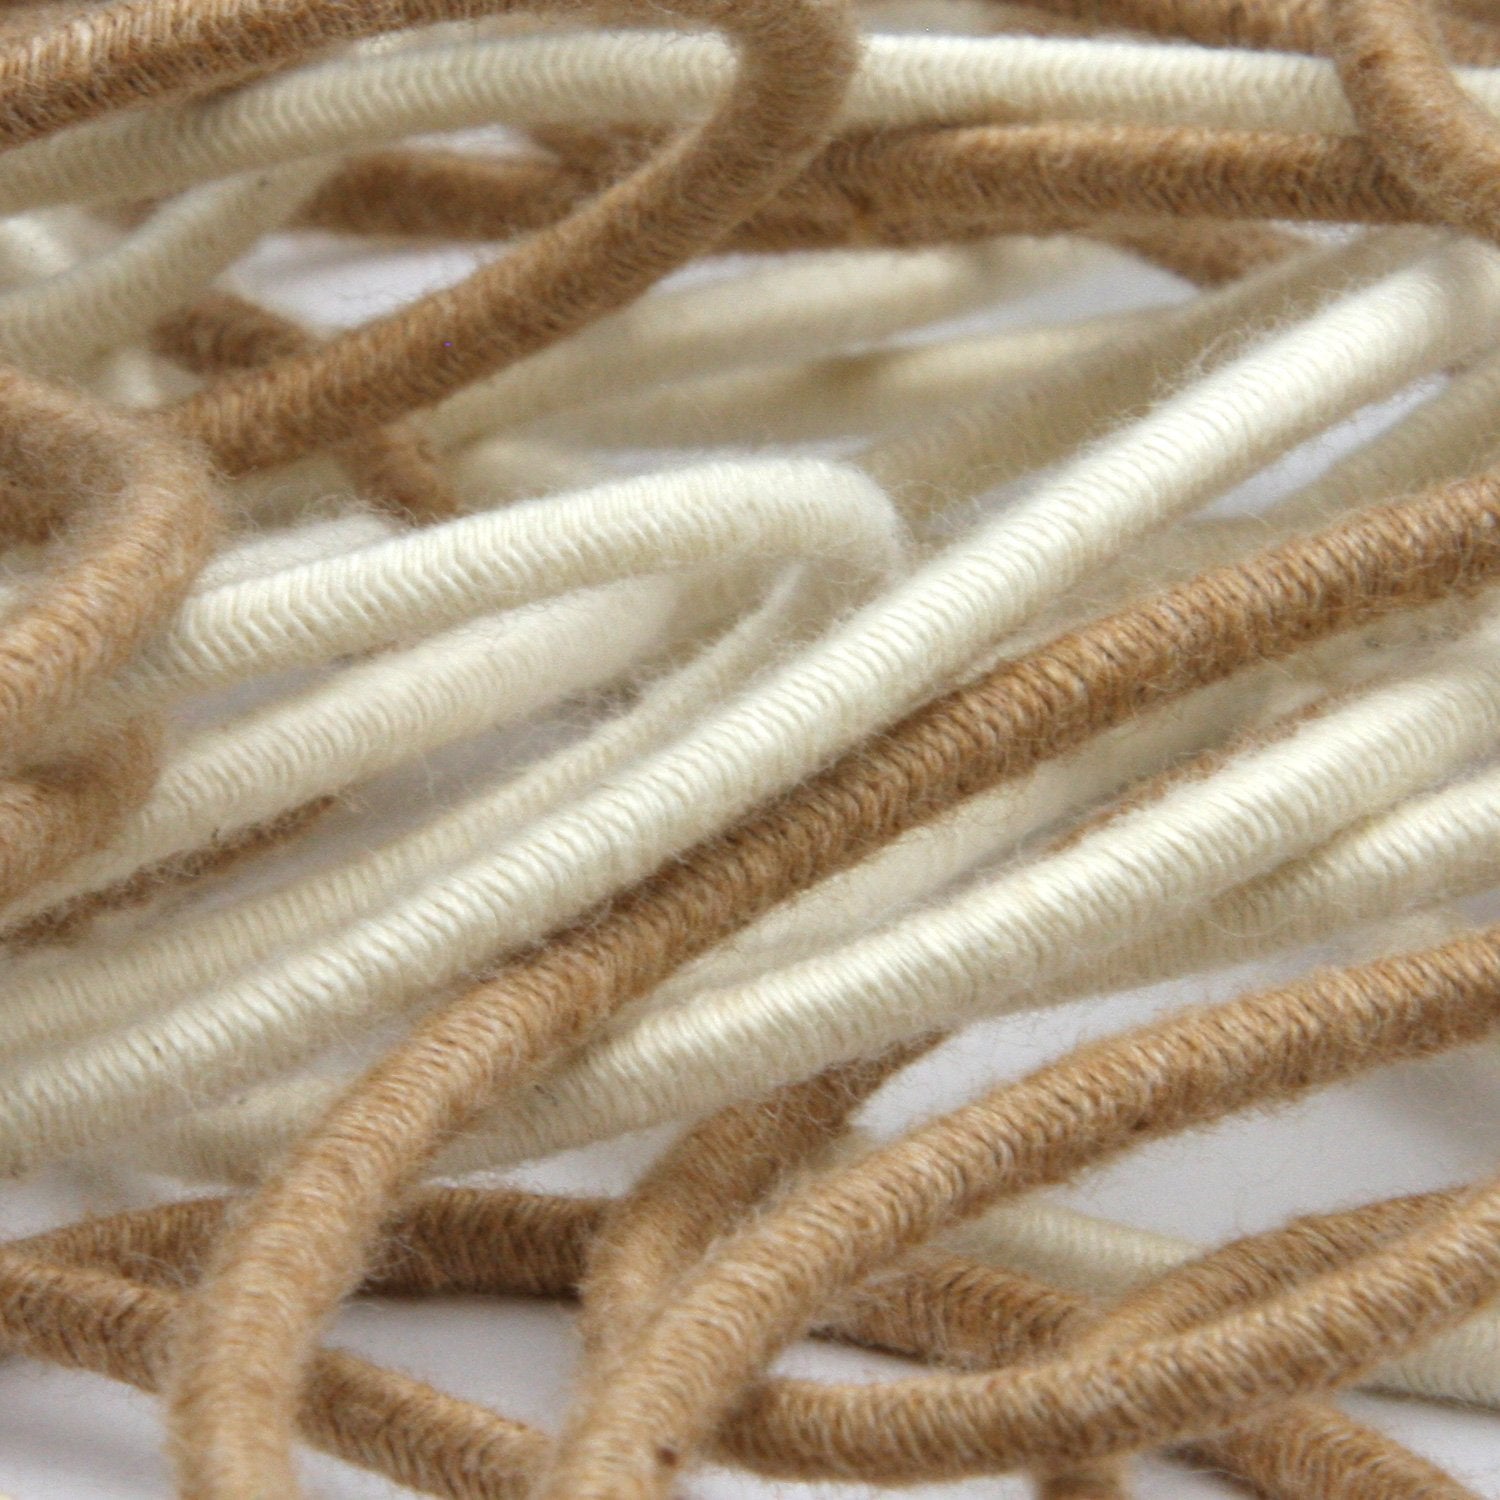 FUJIYAMA RIBBON [Wholesale] Organic Cotton Elastic Cord approx.3mm 50 Meters Roll